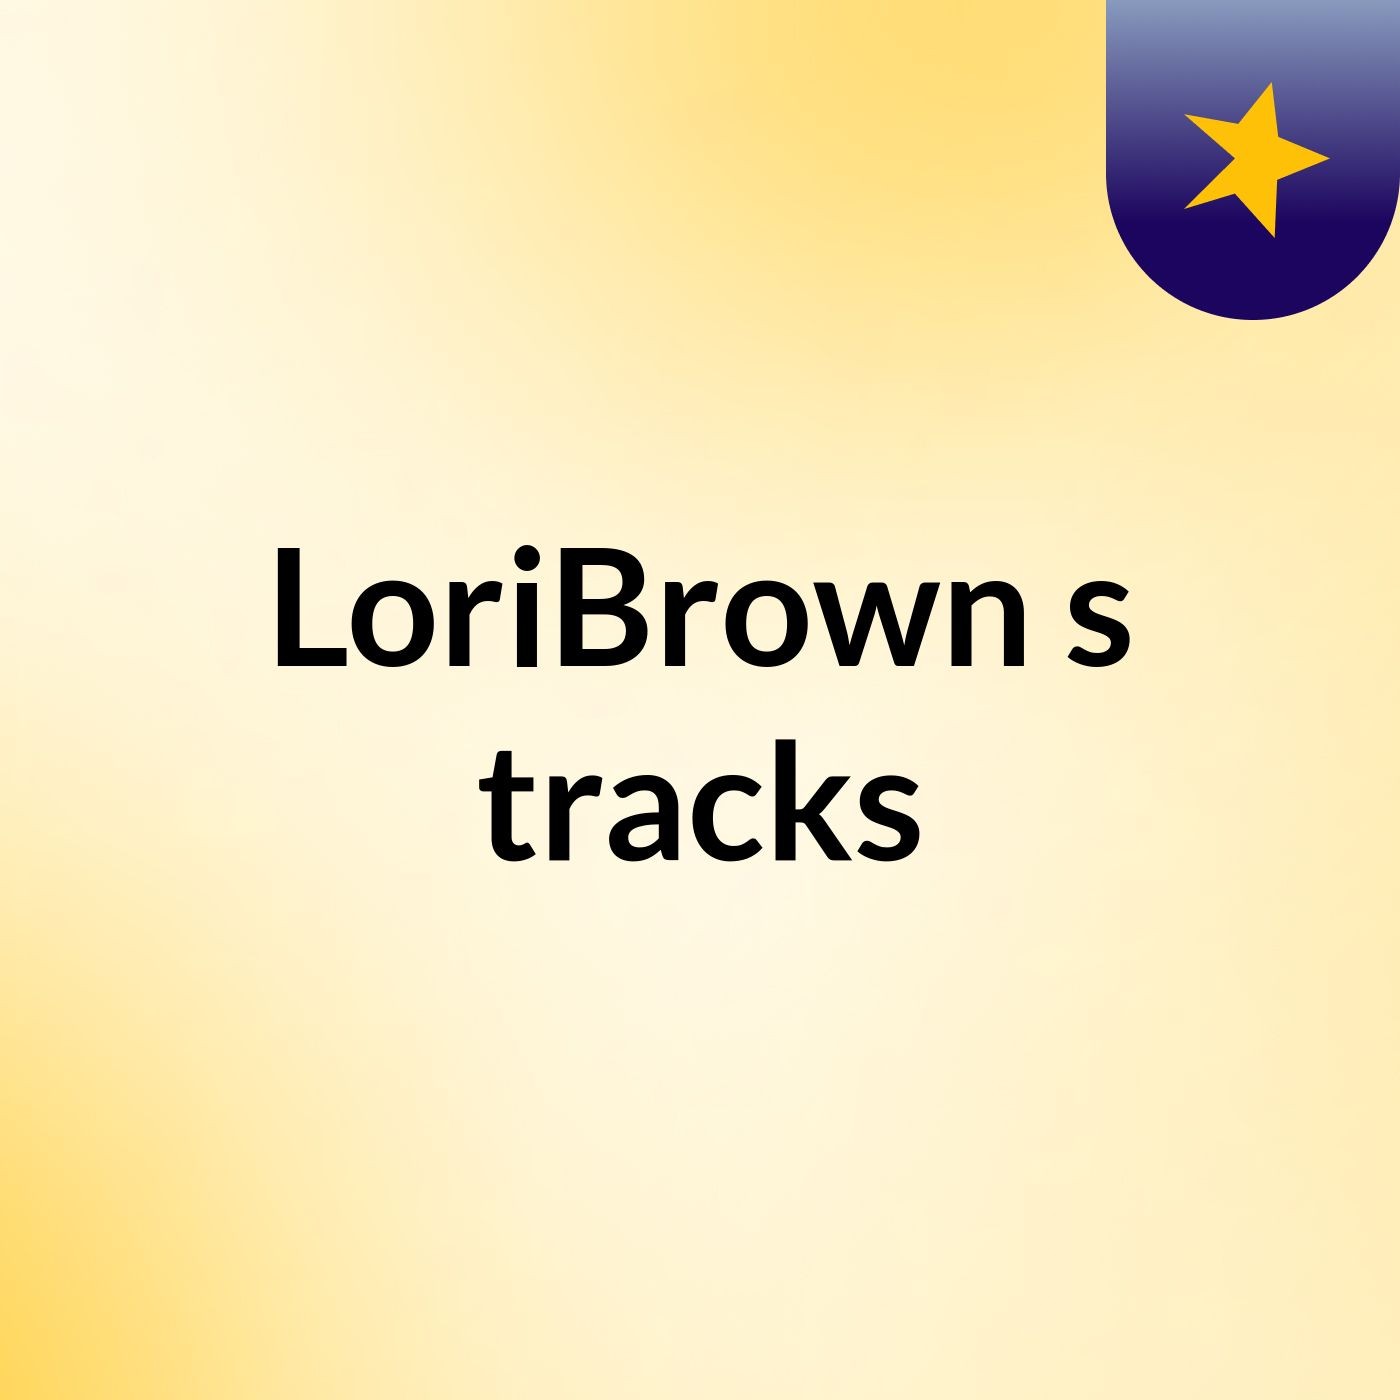 LoriBrown's tracks